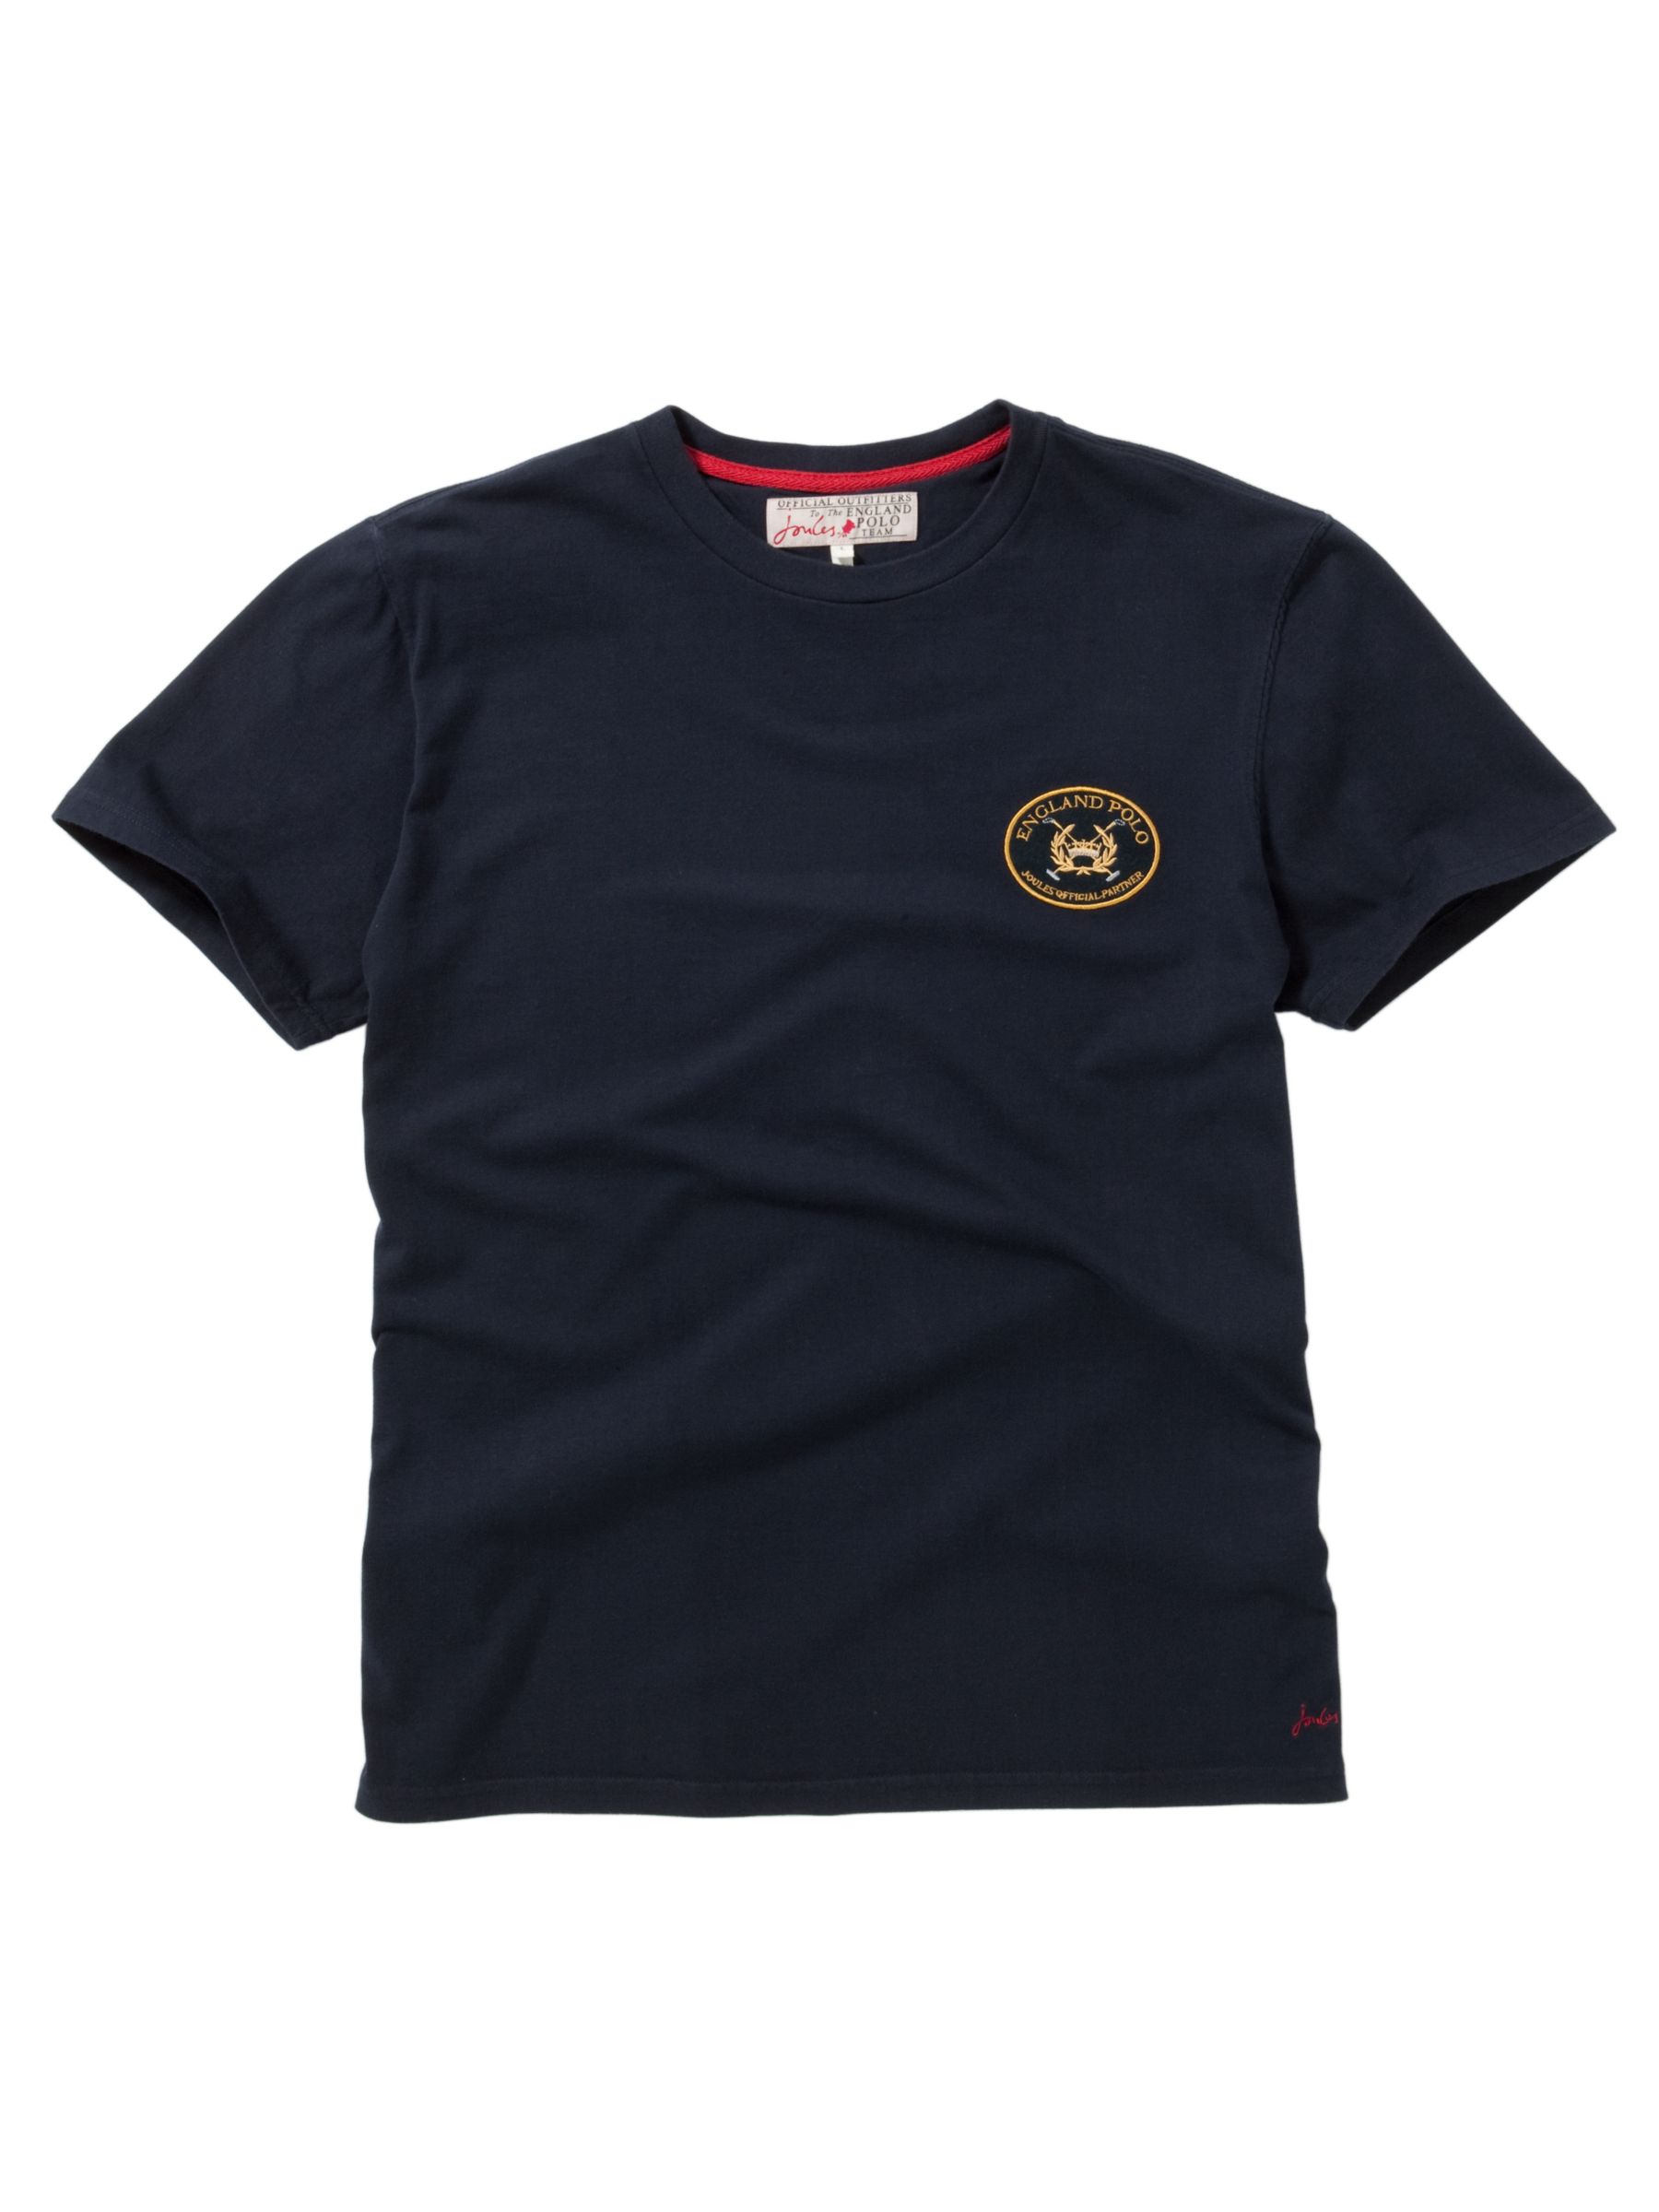 England Polo T-Shirt, Navy